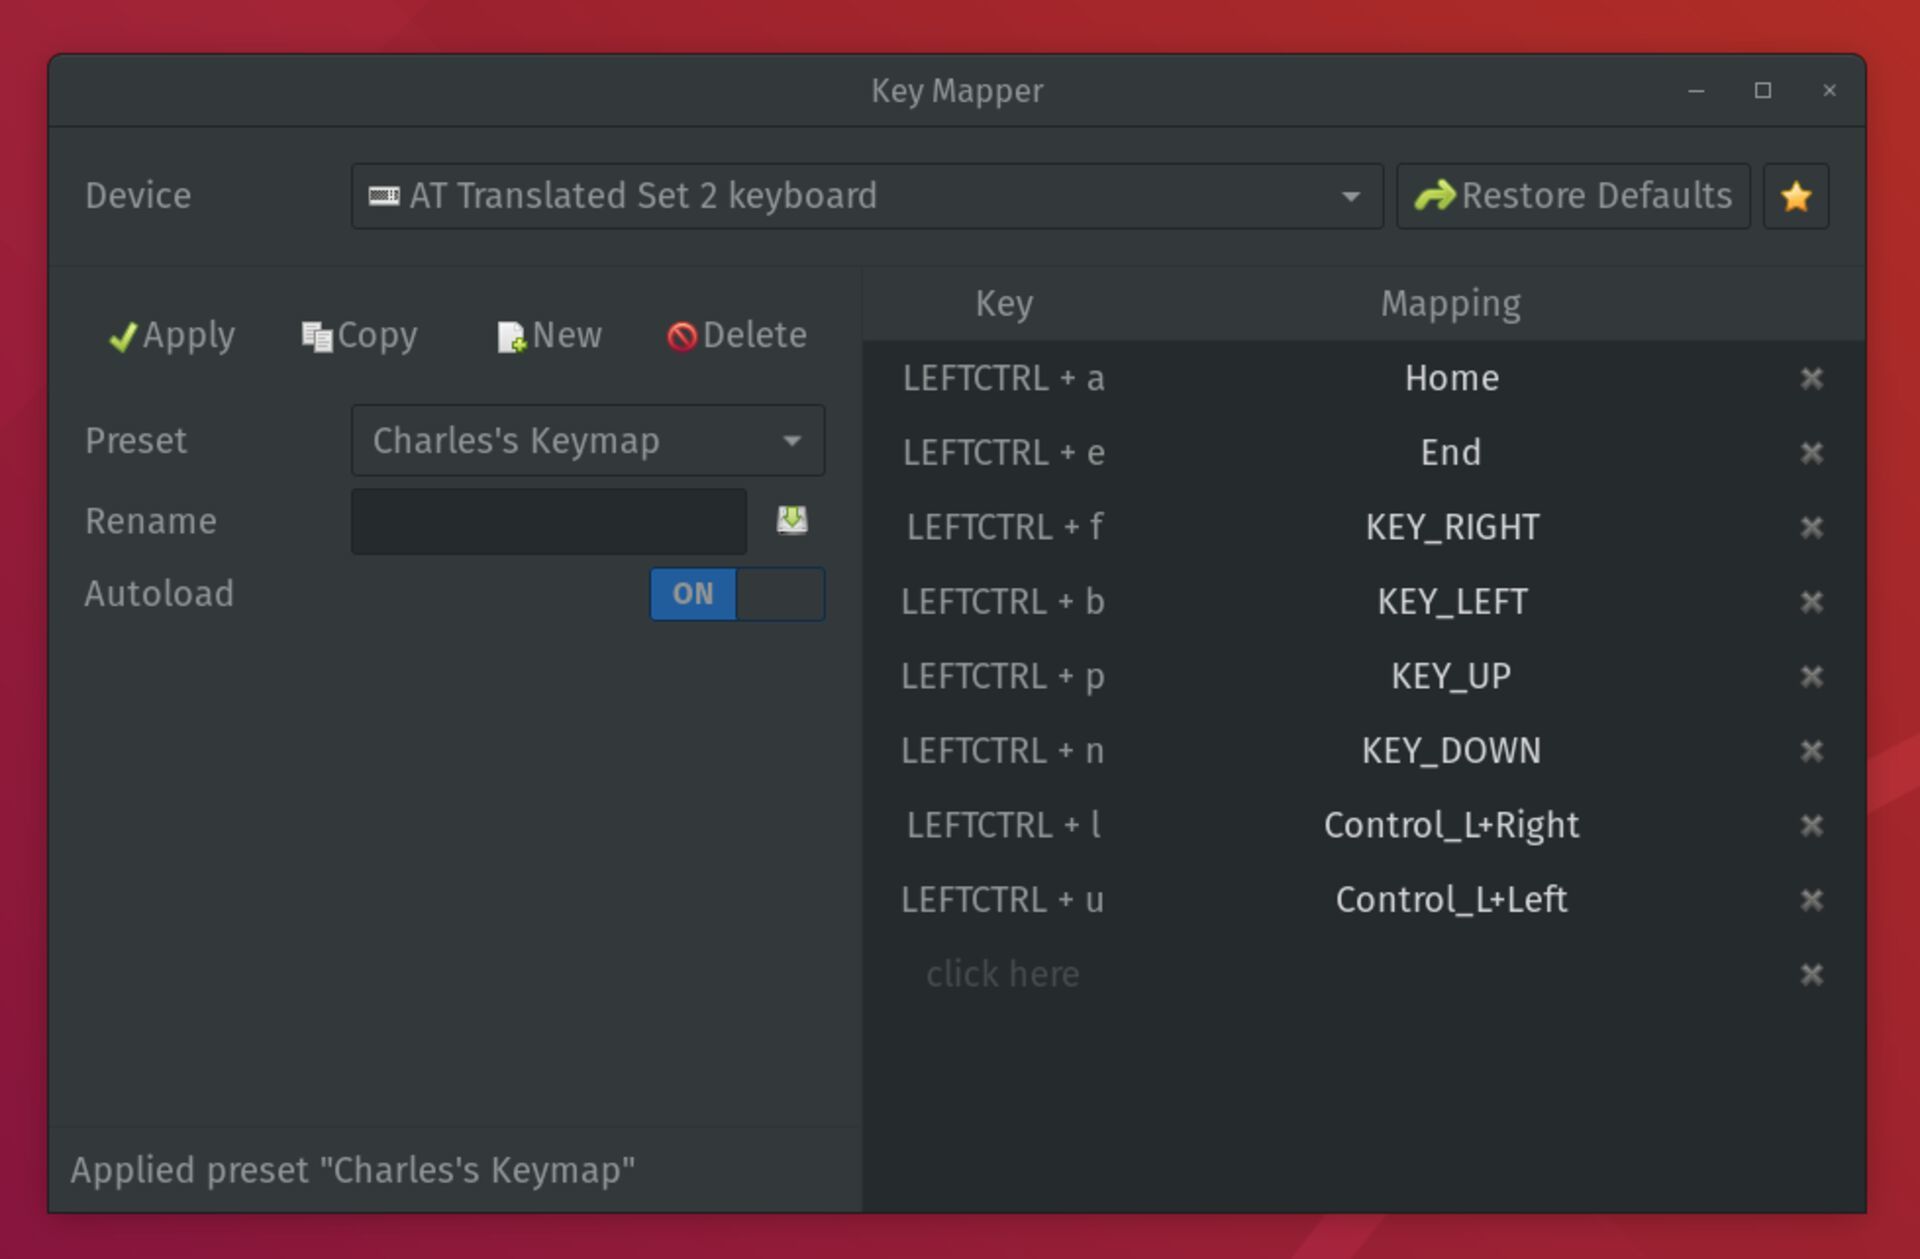 Ubuntu's Key Mapper application